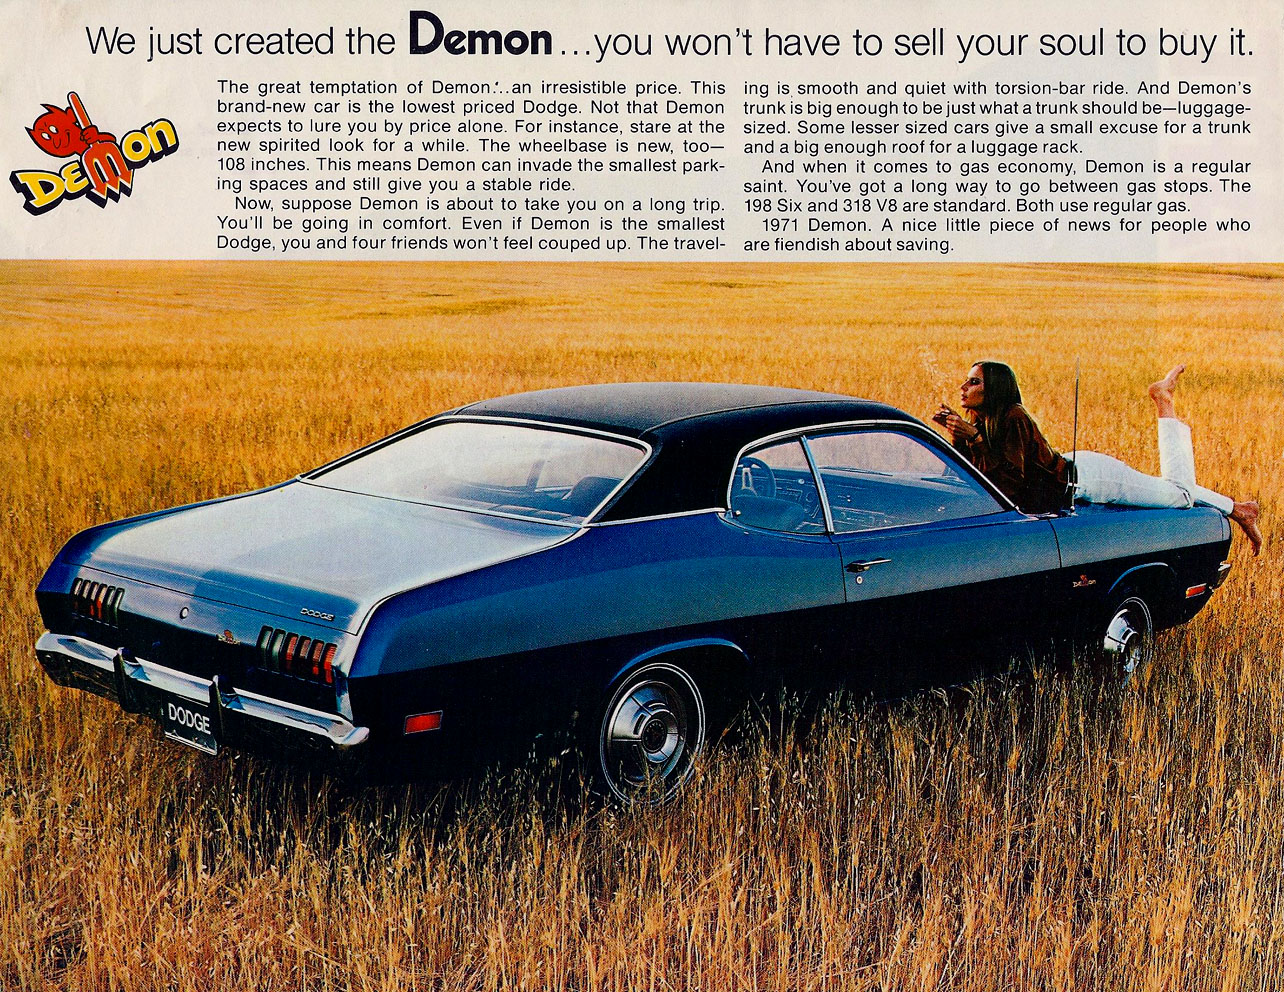 1971 Dodge Dart Demon ad